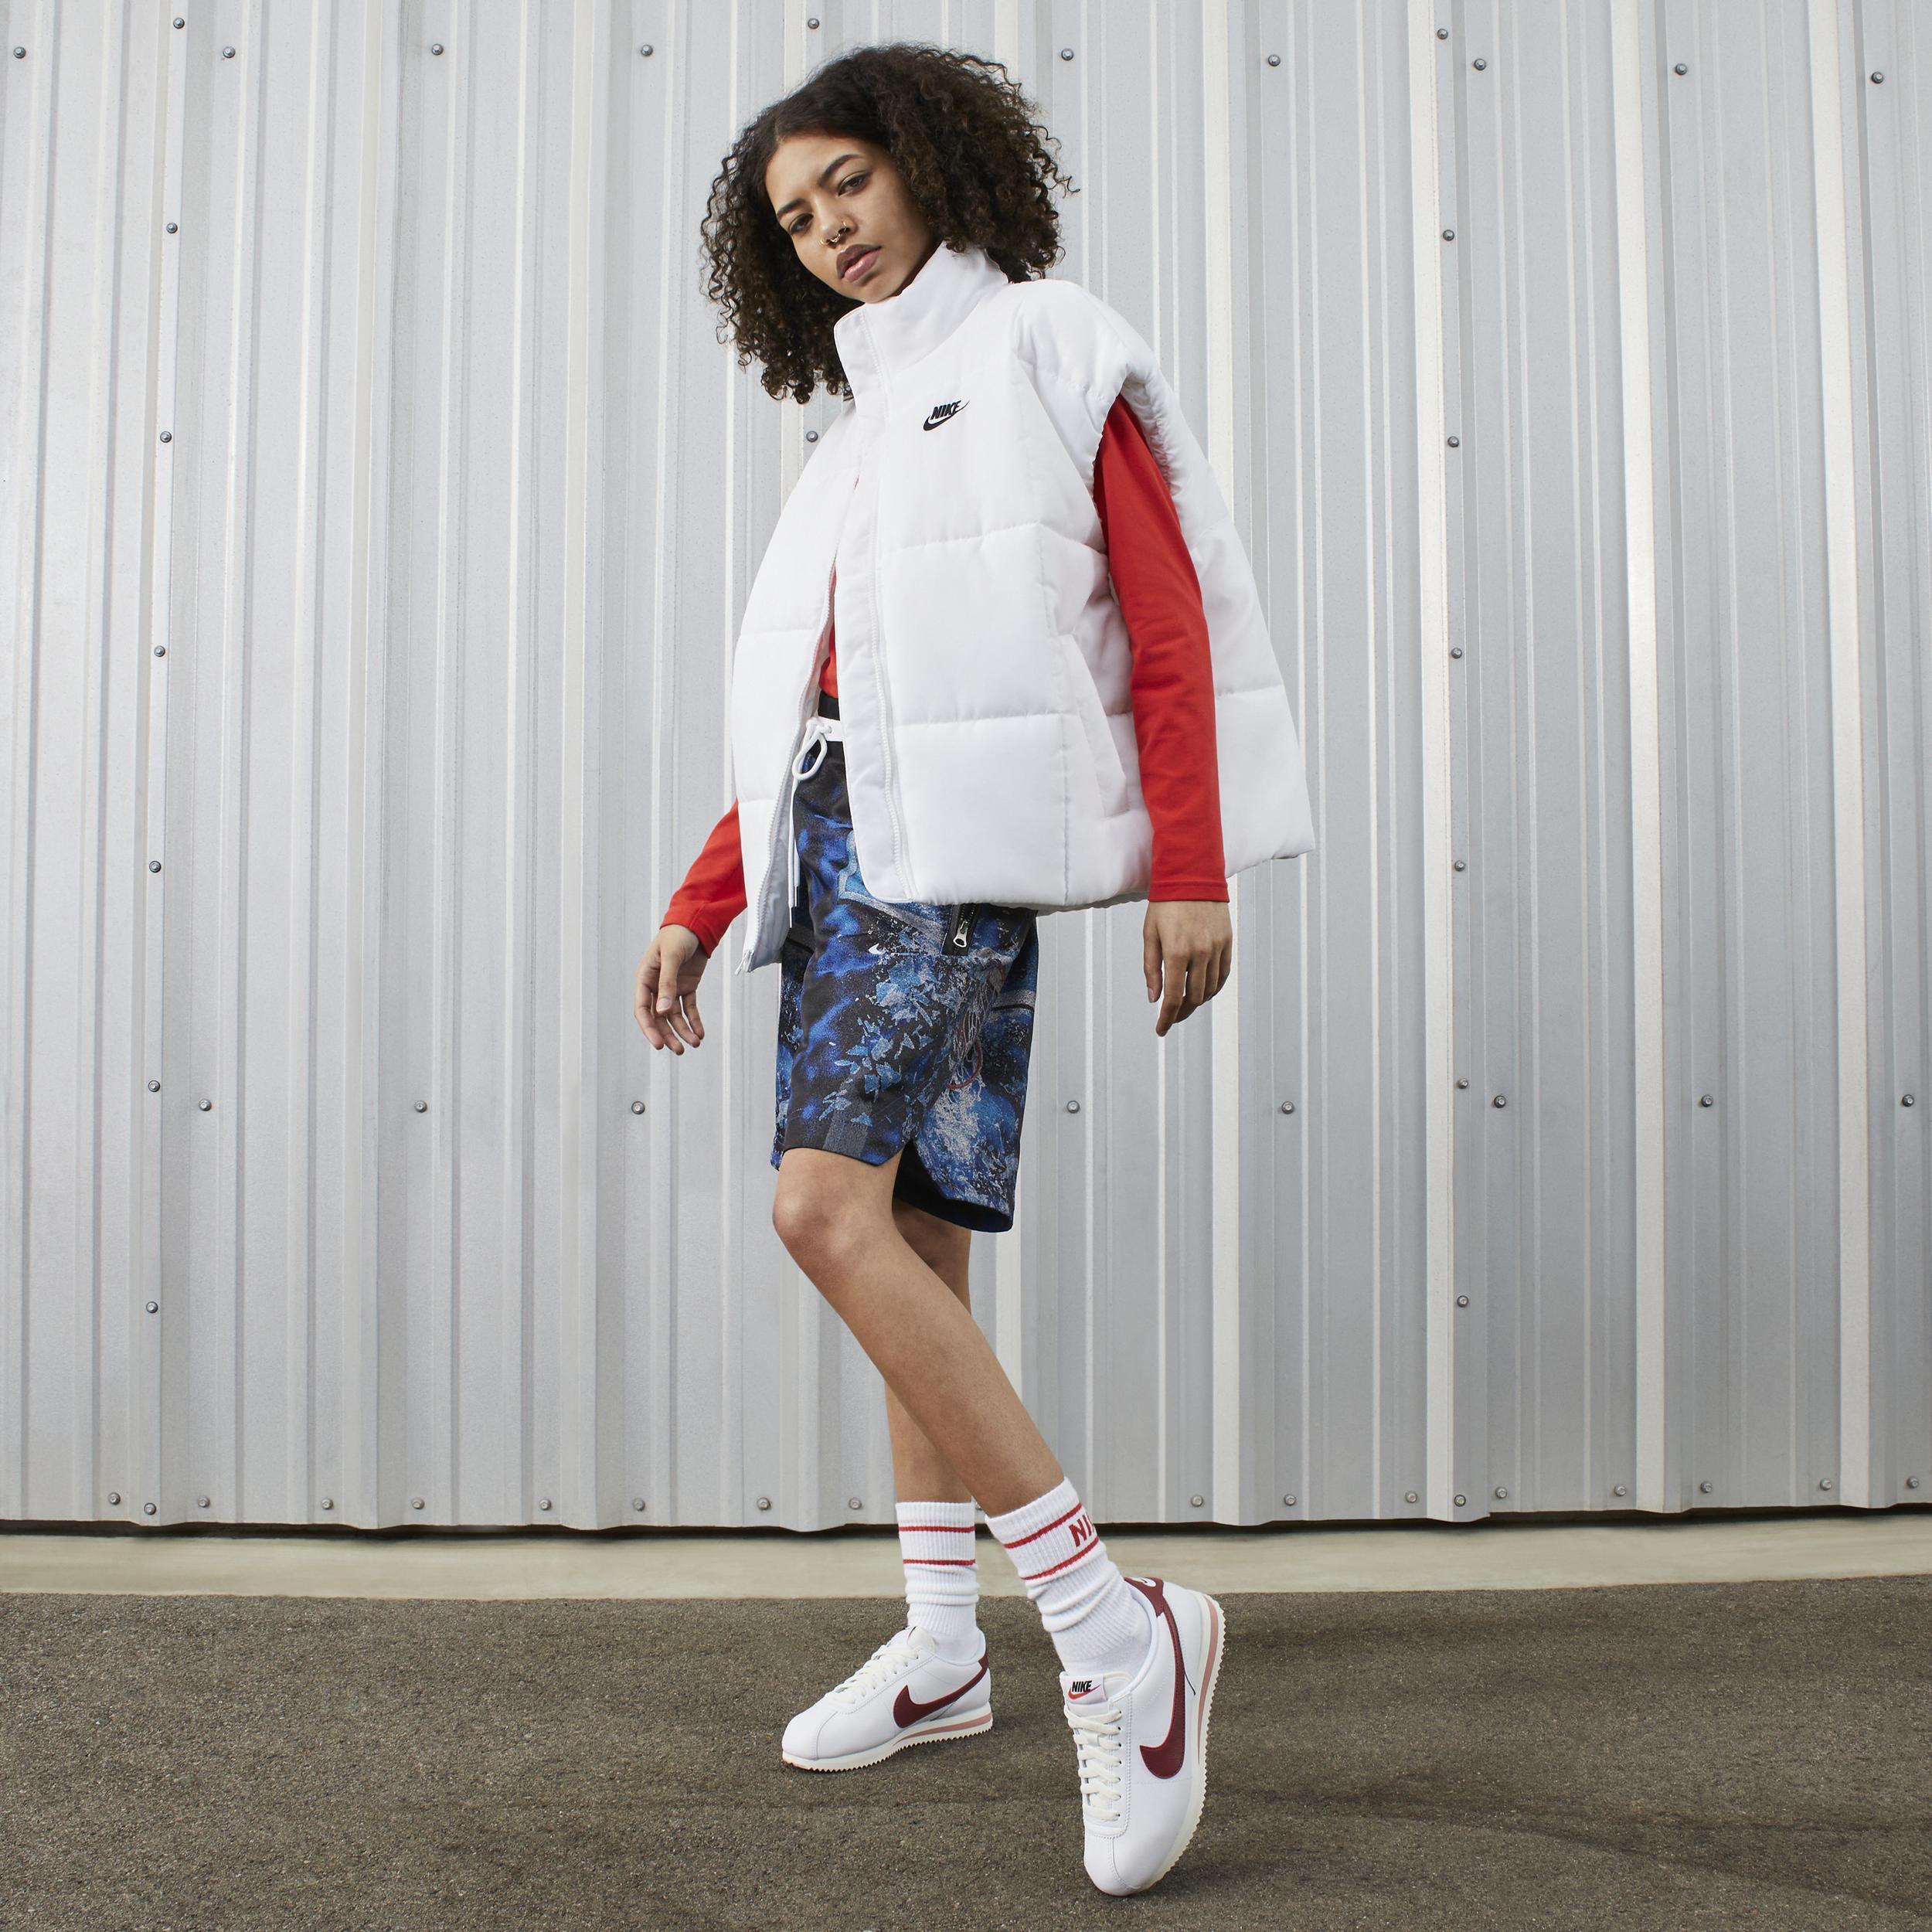 Nike Cortez Sneaker Product Image